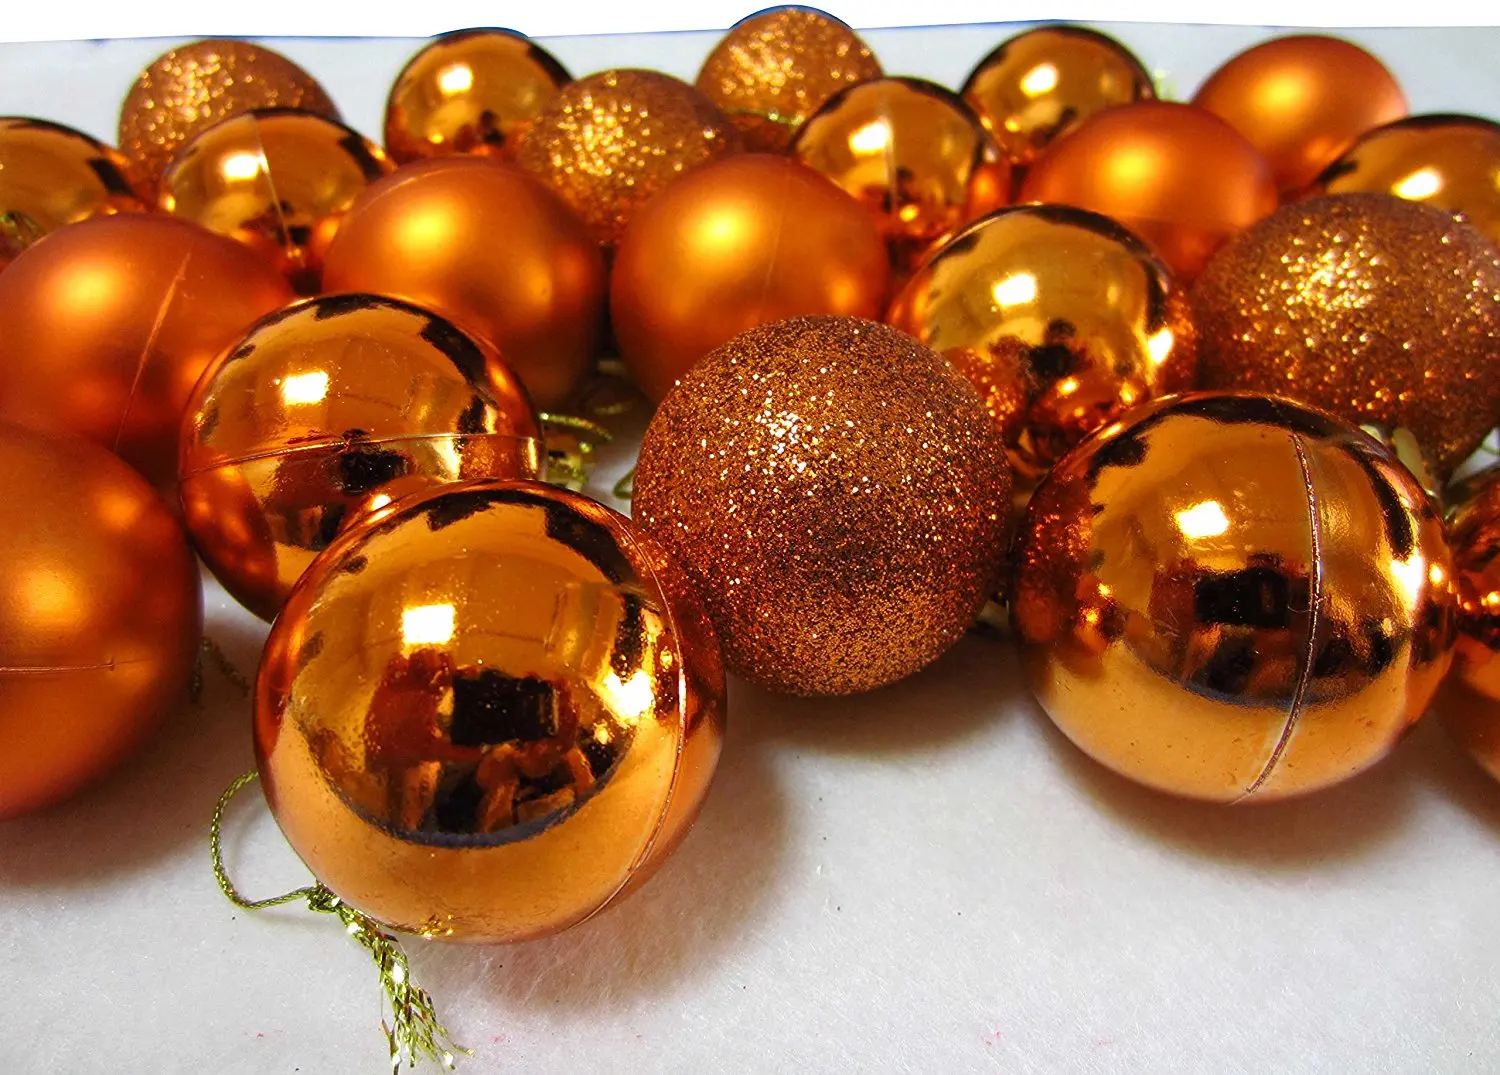 bronze christmas balls